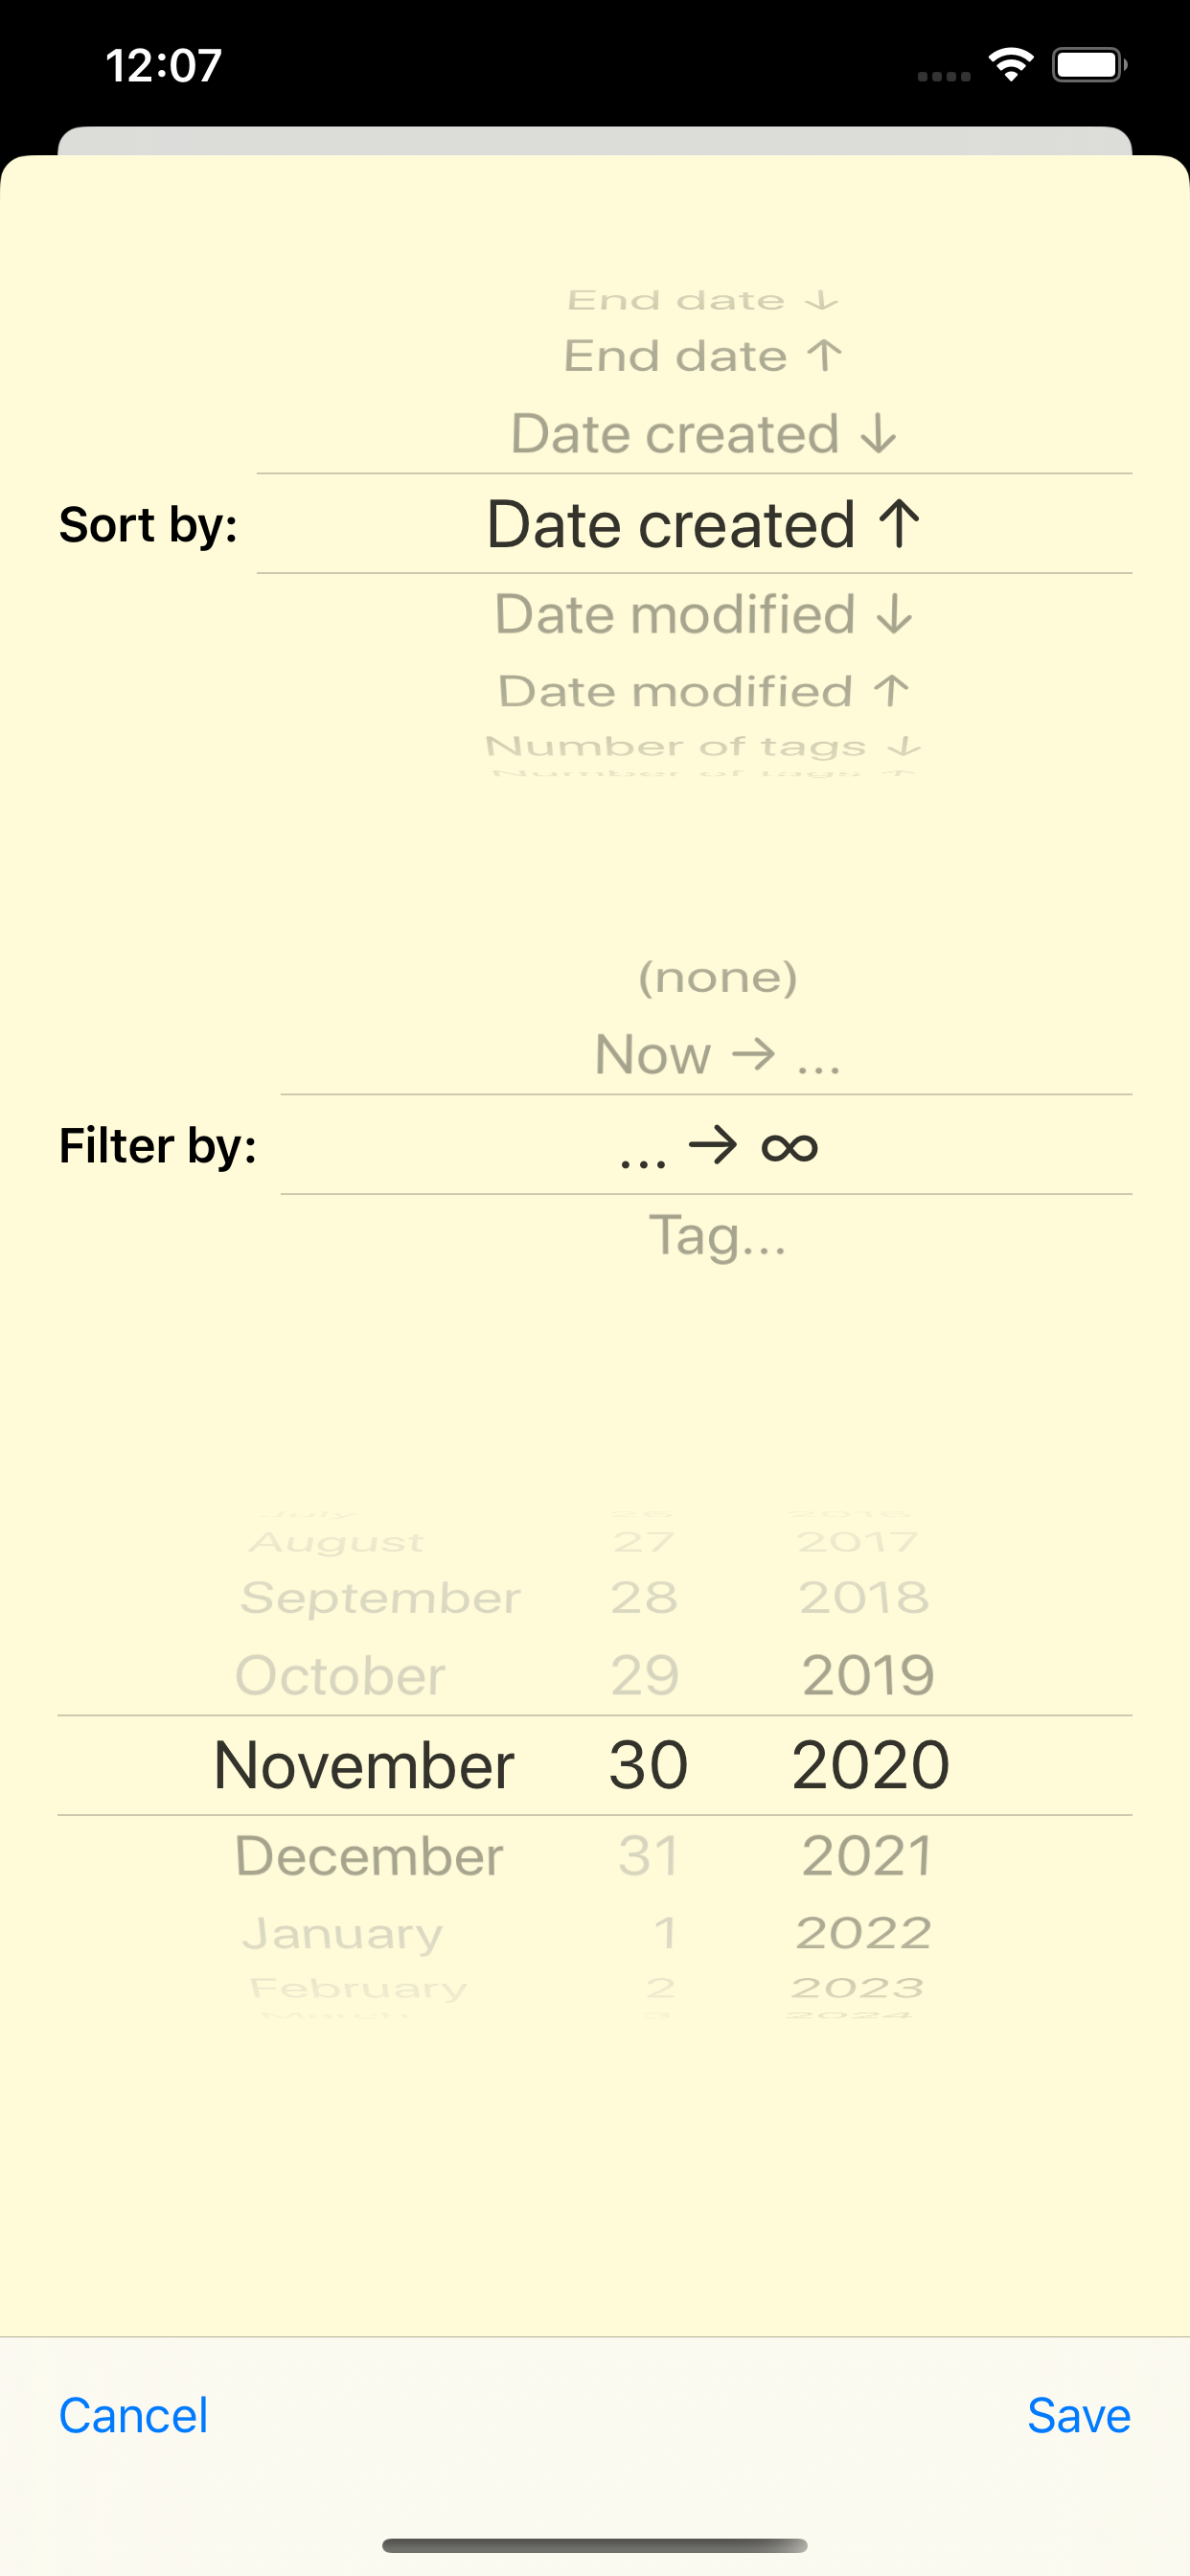 App screenshot showing sort/filter options